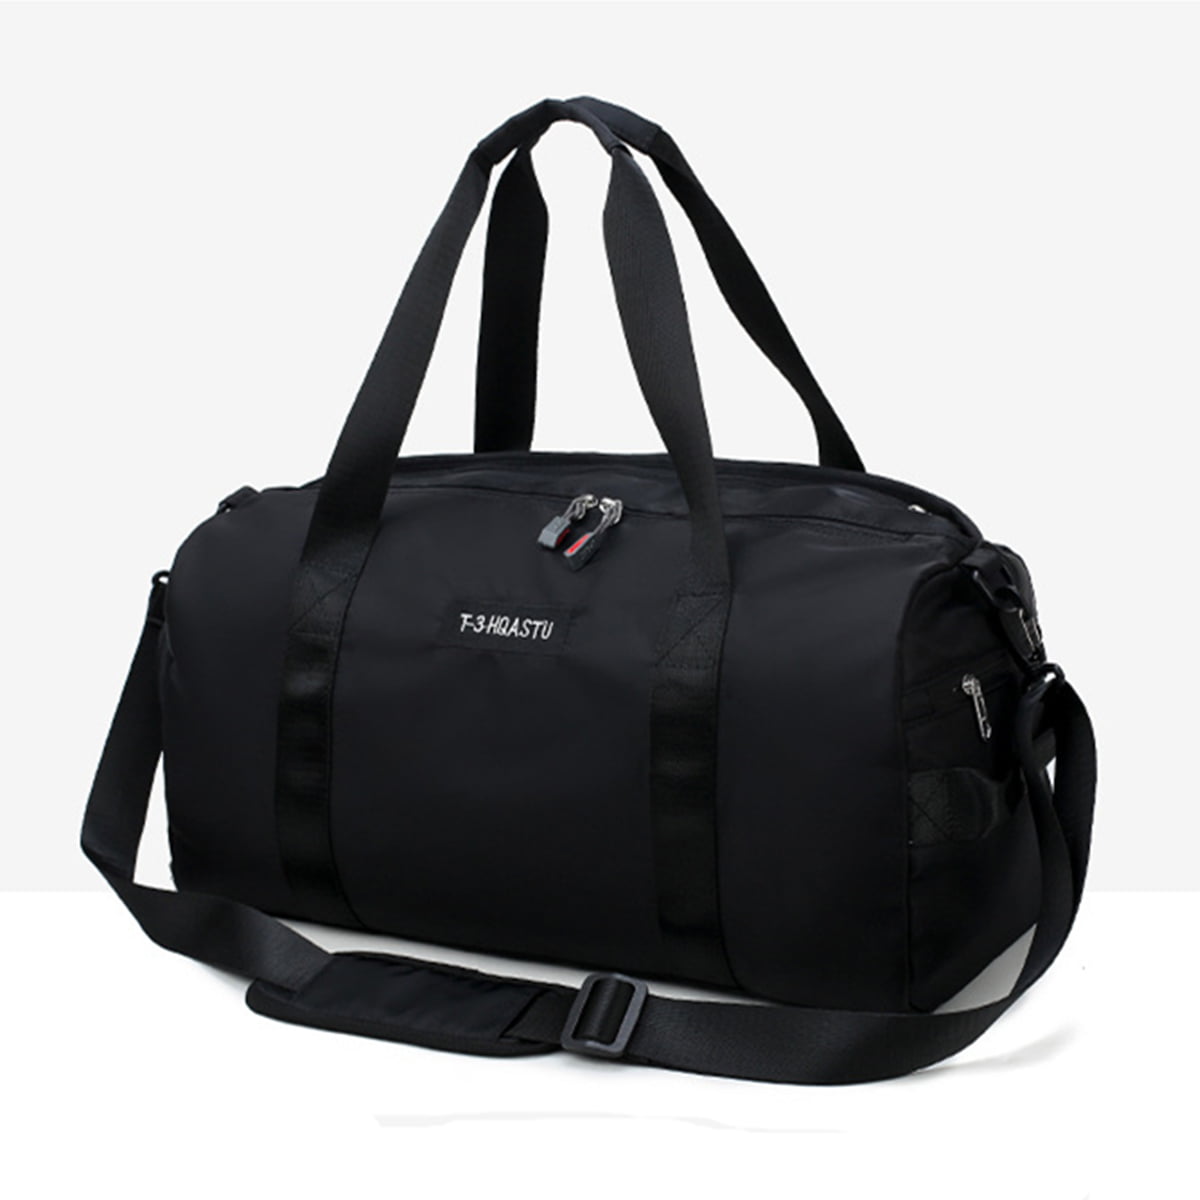 Men Women Sports Gym Yoga Shoulder Bag Travel Hand Luggage Handbag Duffel Pack 